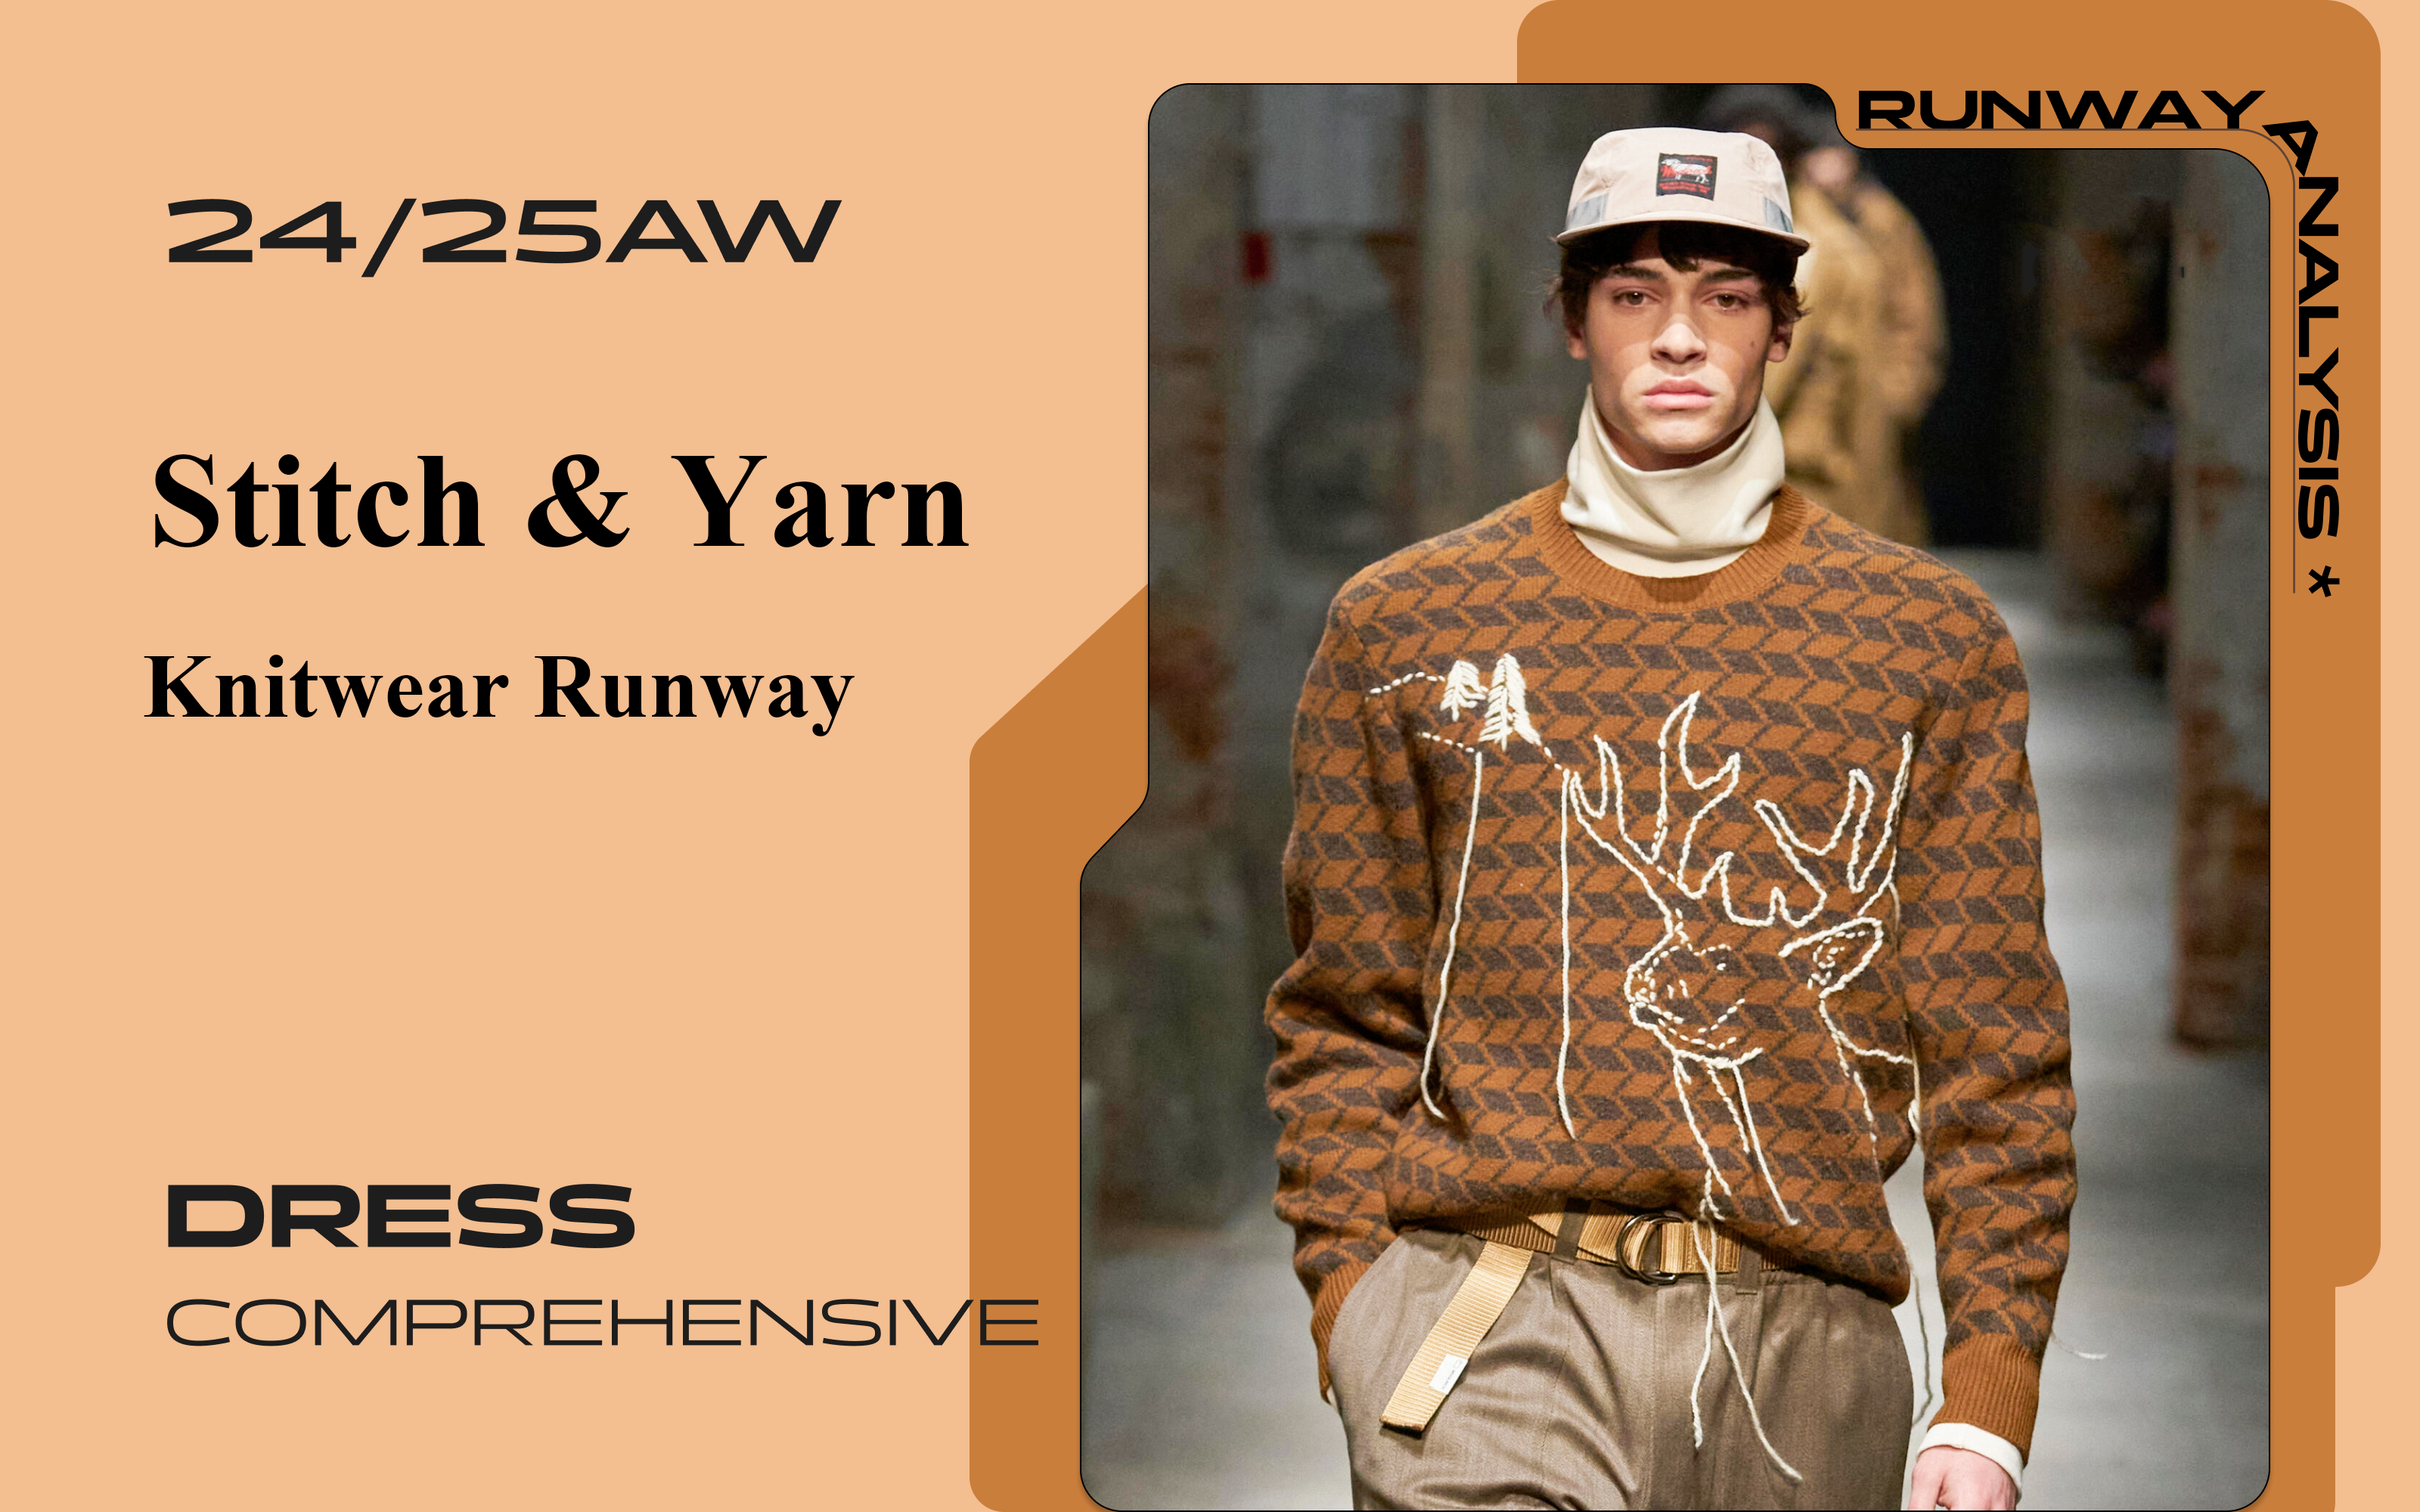 A/W 24/25 Stitch & Yarn Trend for Men's Knitwear Runway